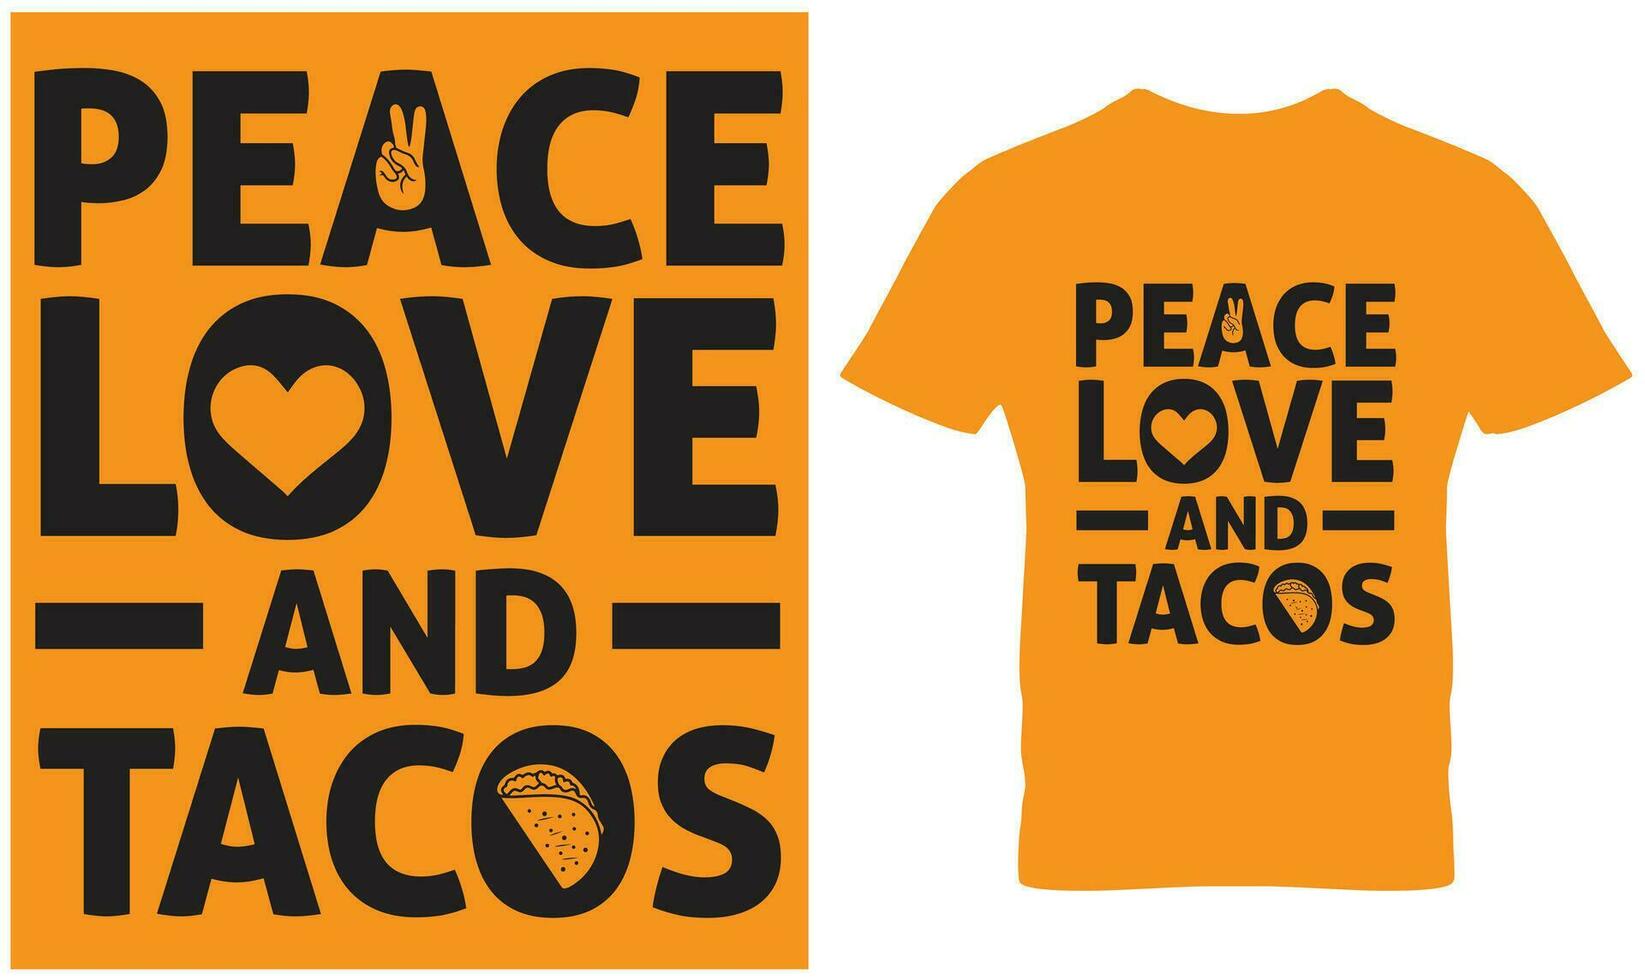 Tacos T-Shirt Design Vektor Grafik.